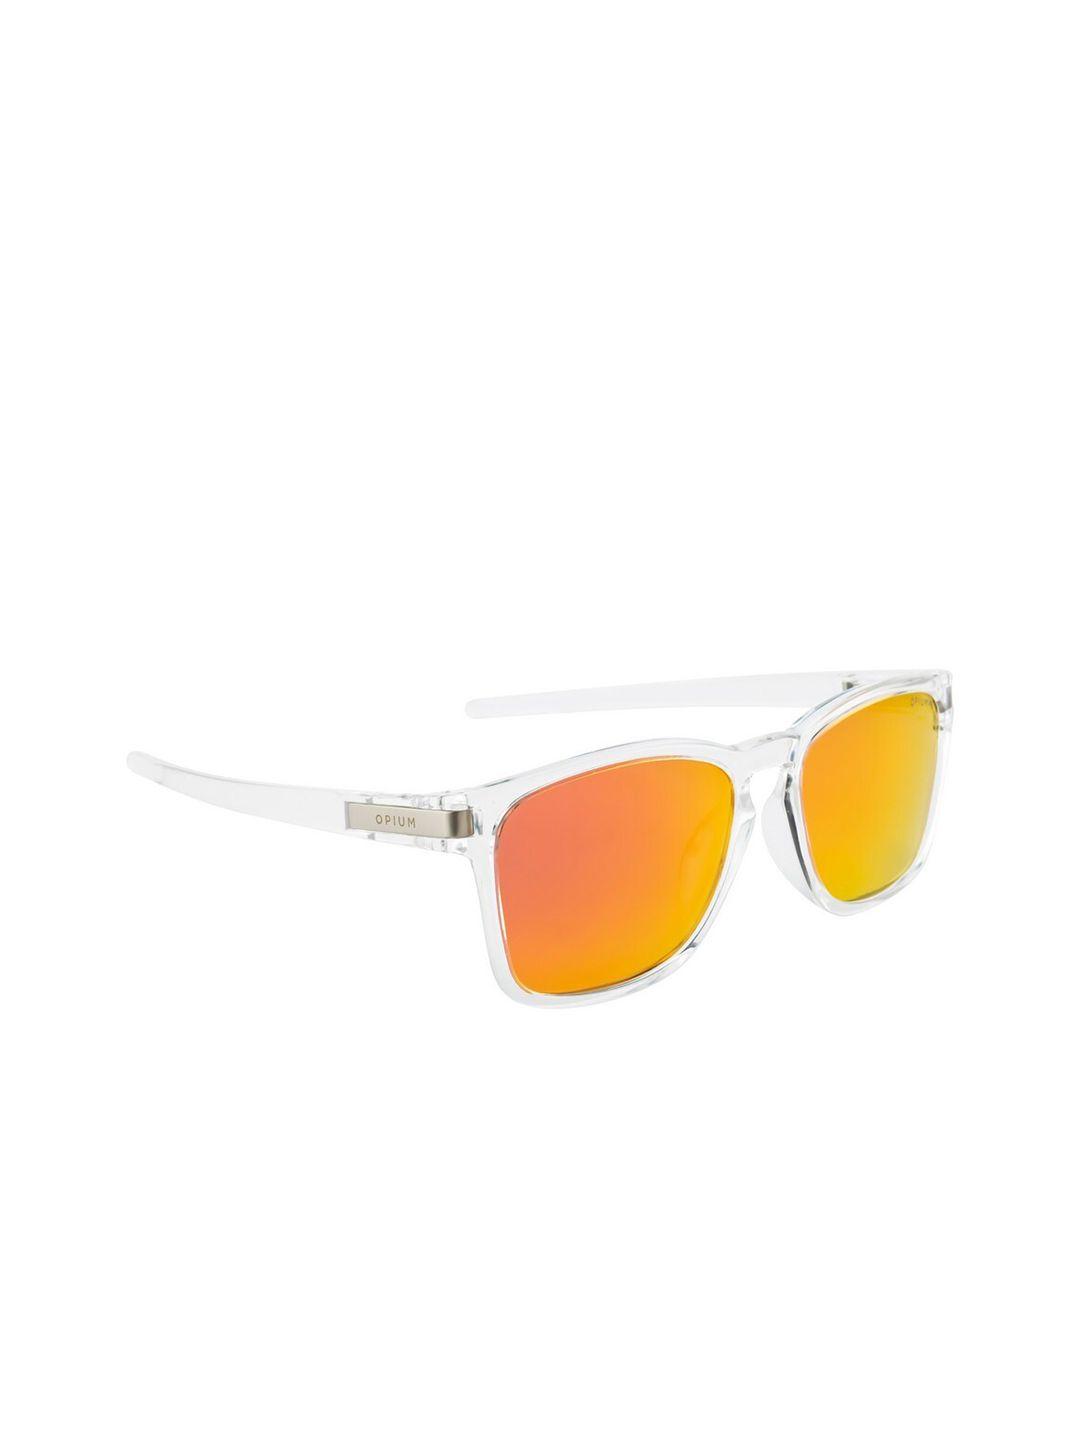 opium men orange lens wayfarer sunglasses with polarised and uv protected lens